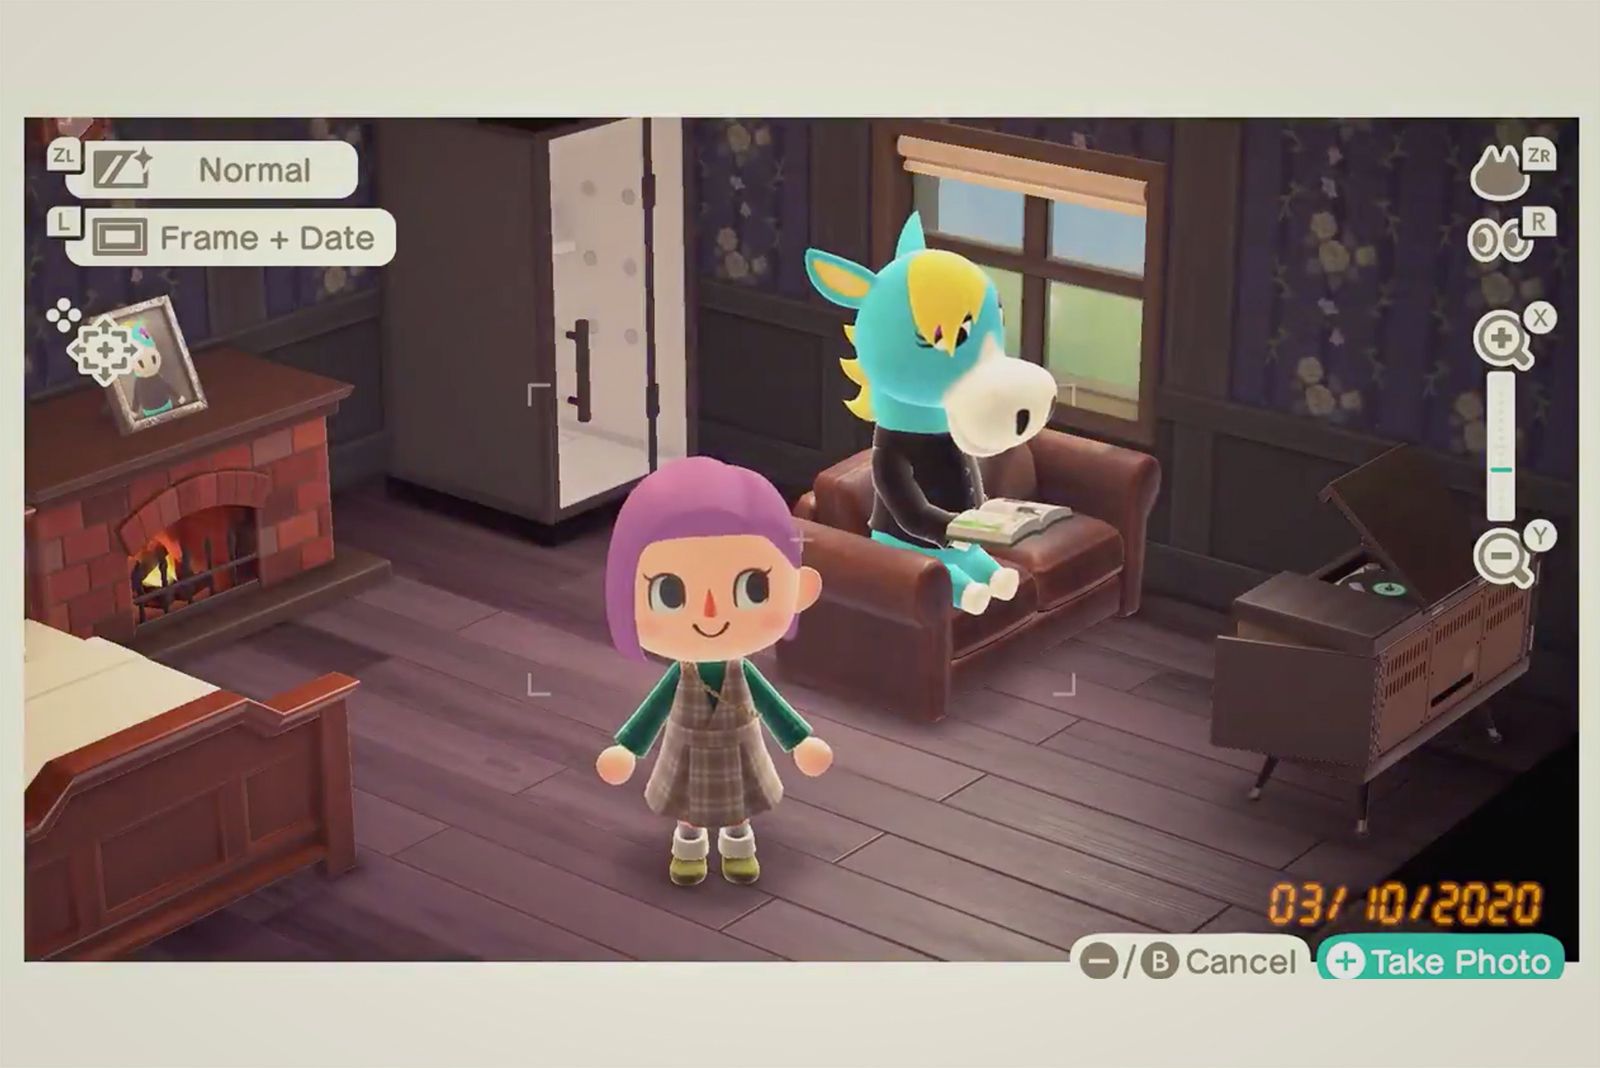 How to take screenshots in Animal Crossing: New Horizons